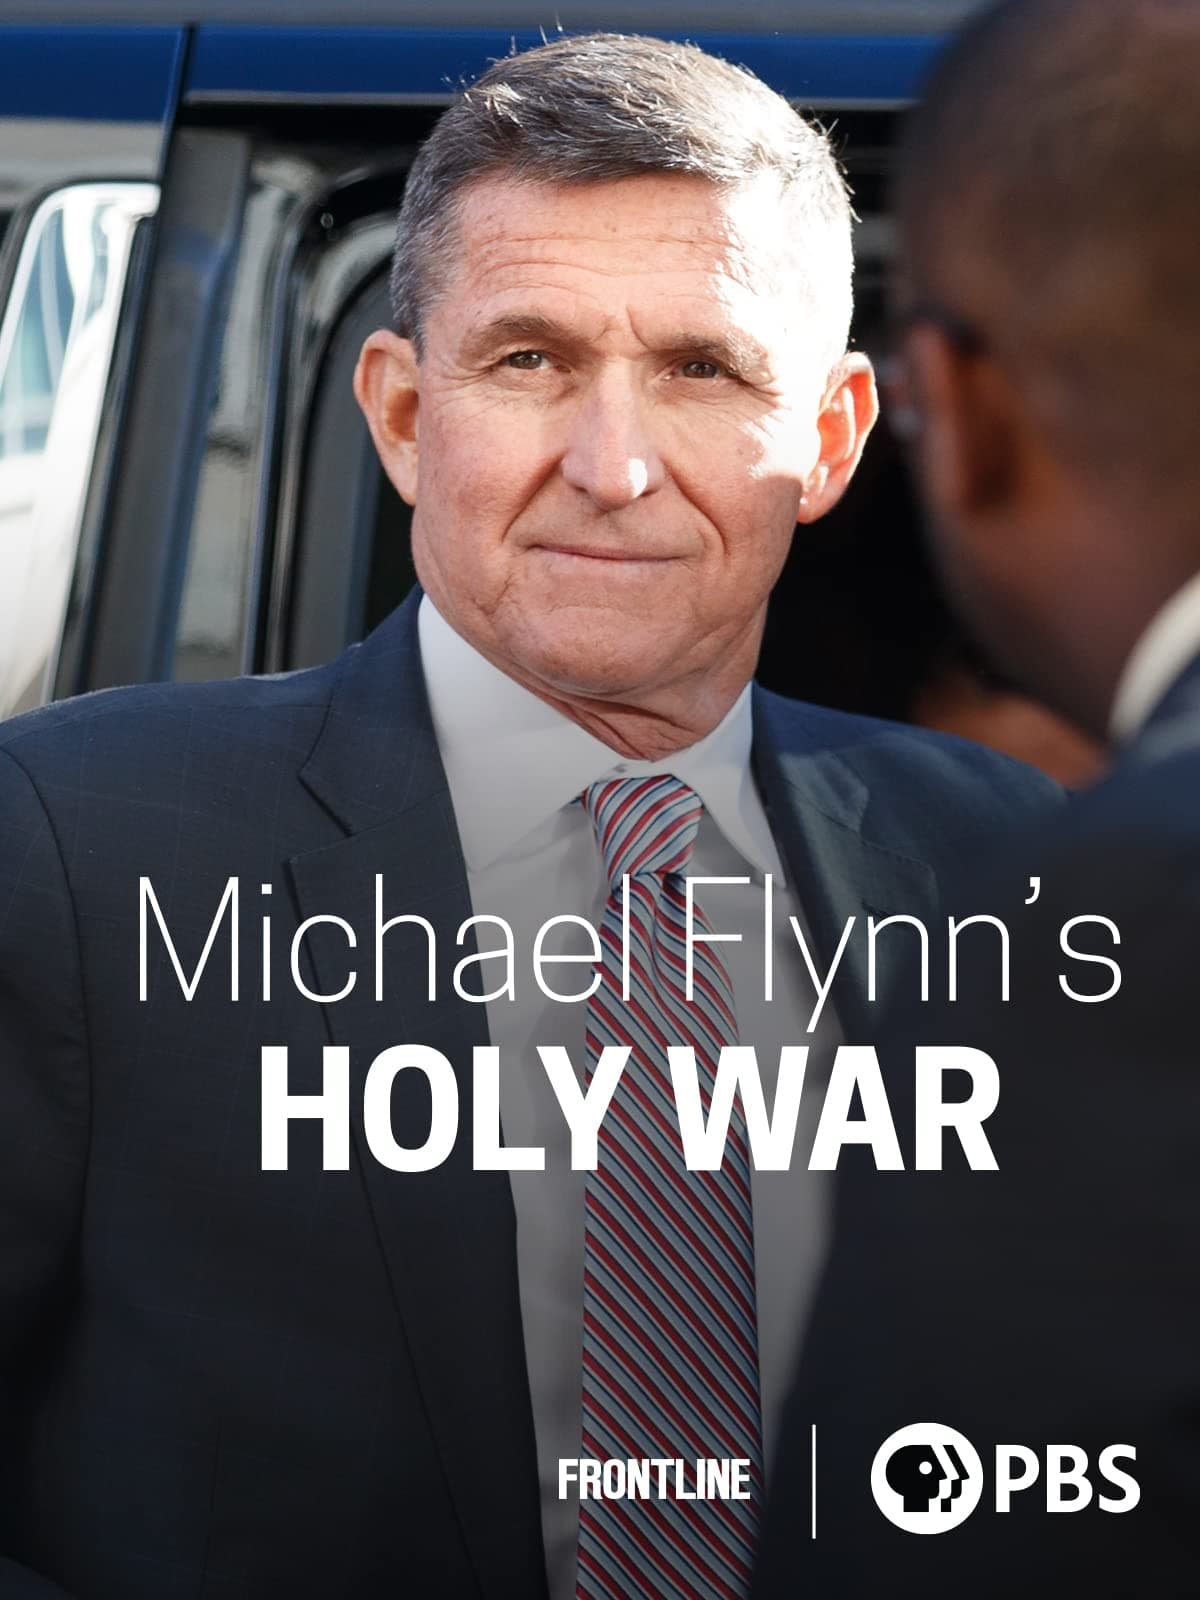 Michael Flynn's Holy War